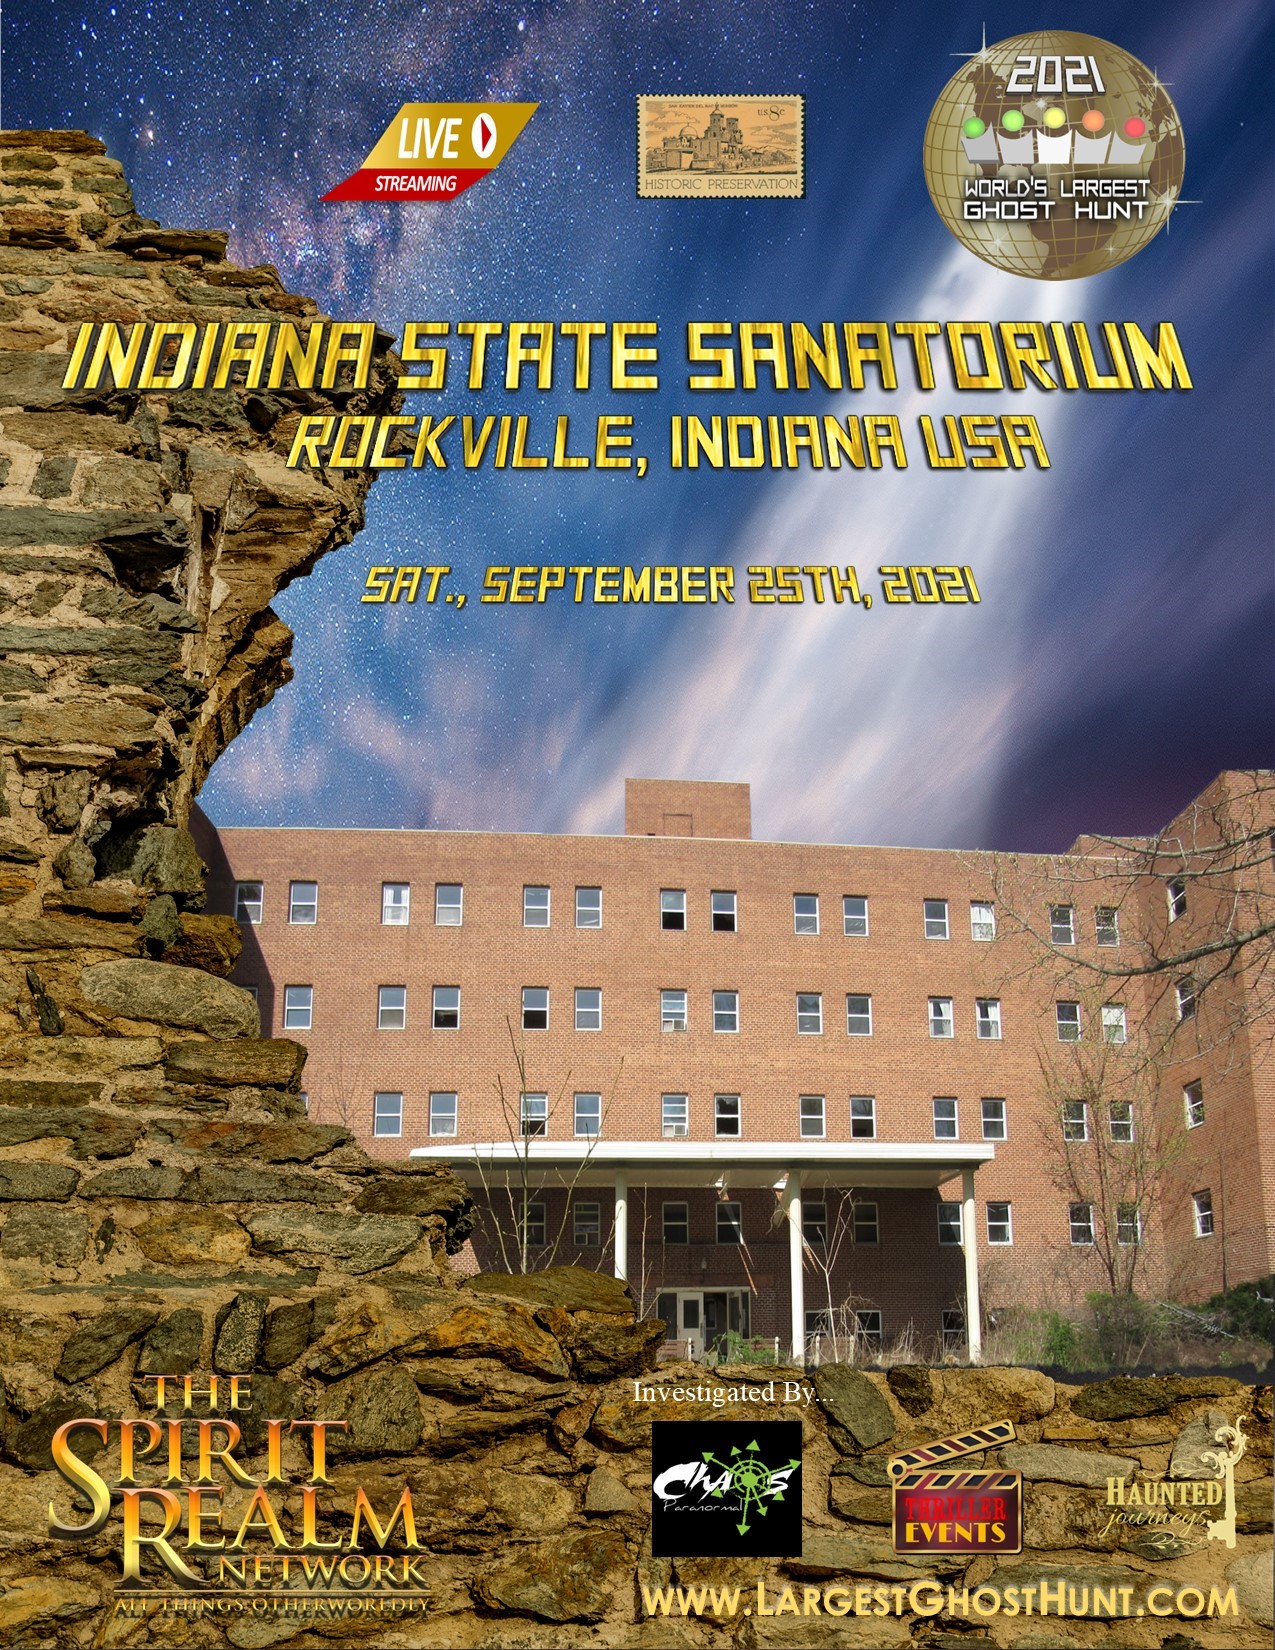 the sanatorium review